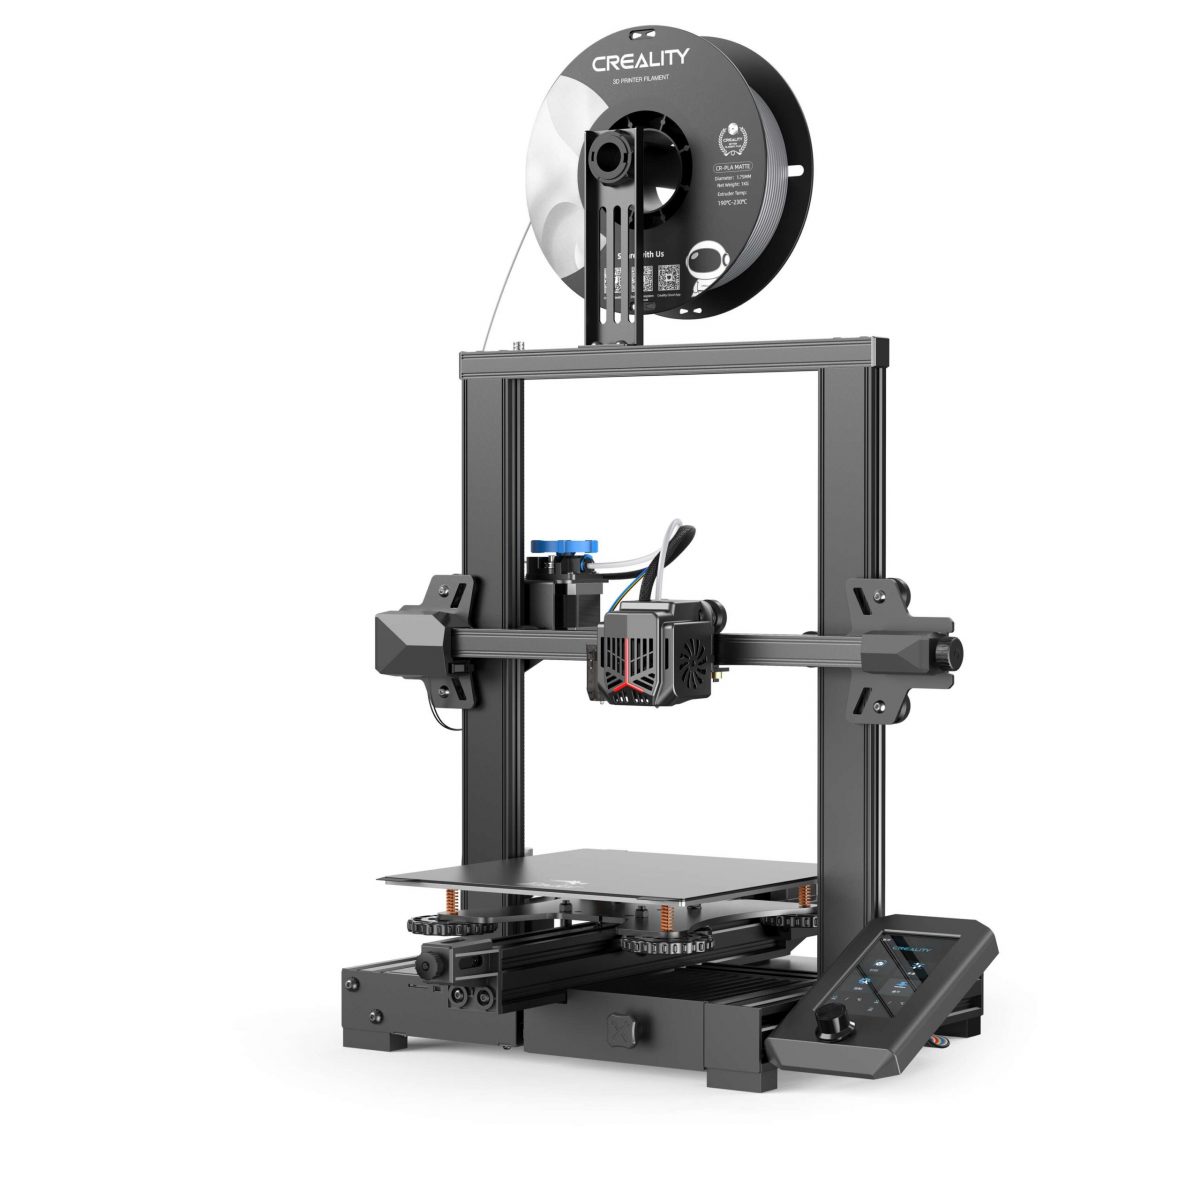 CREALITY Ender-3 V2 Neo 3D Printer - CR touch Auto-Leveling, DIY FDM, Build Size 22x22x25cm - CREALITY 2.35.71.00.007